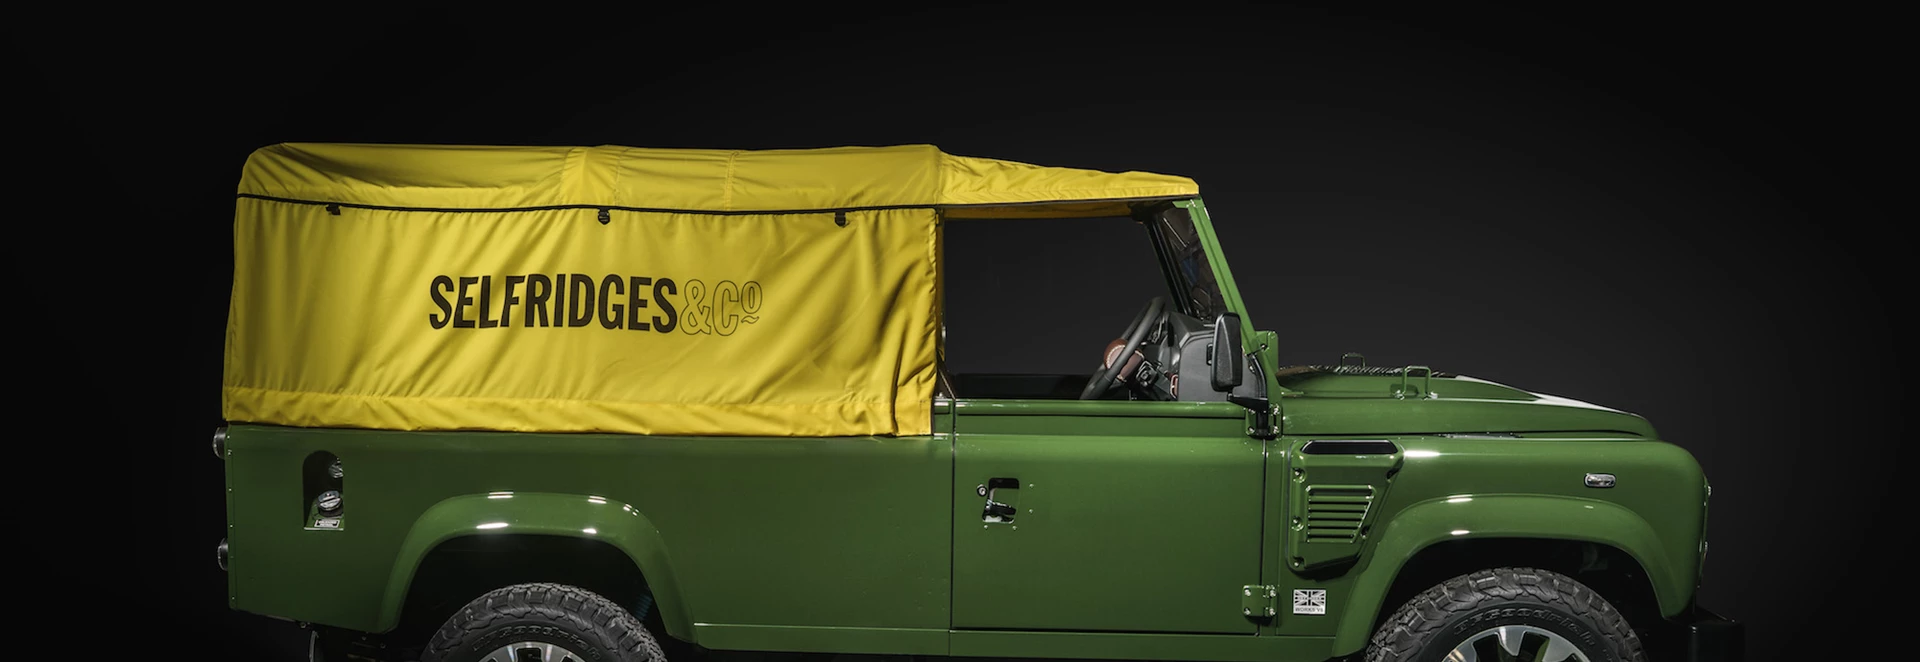 Land Rover unveils one-off Defender Selfridges Edition